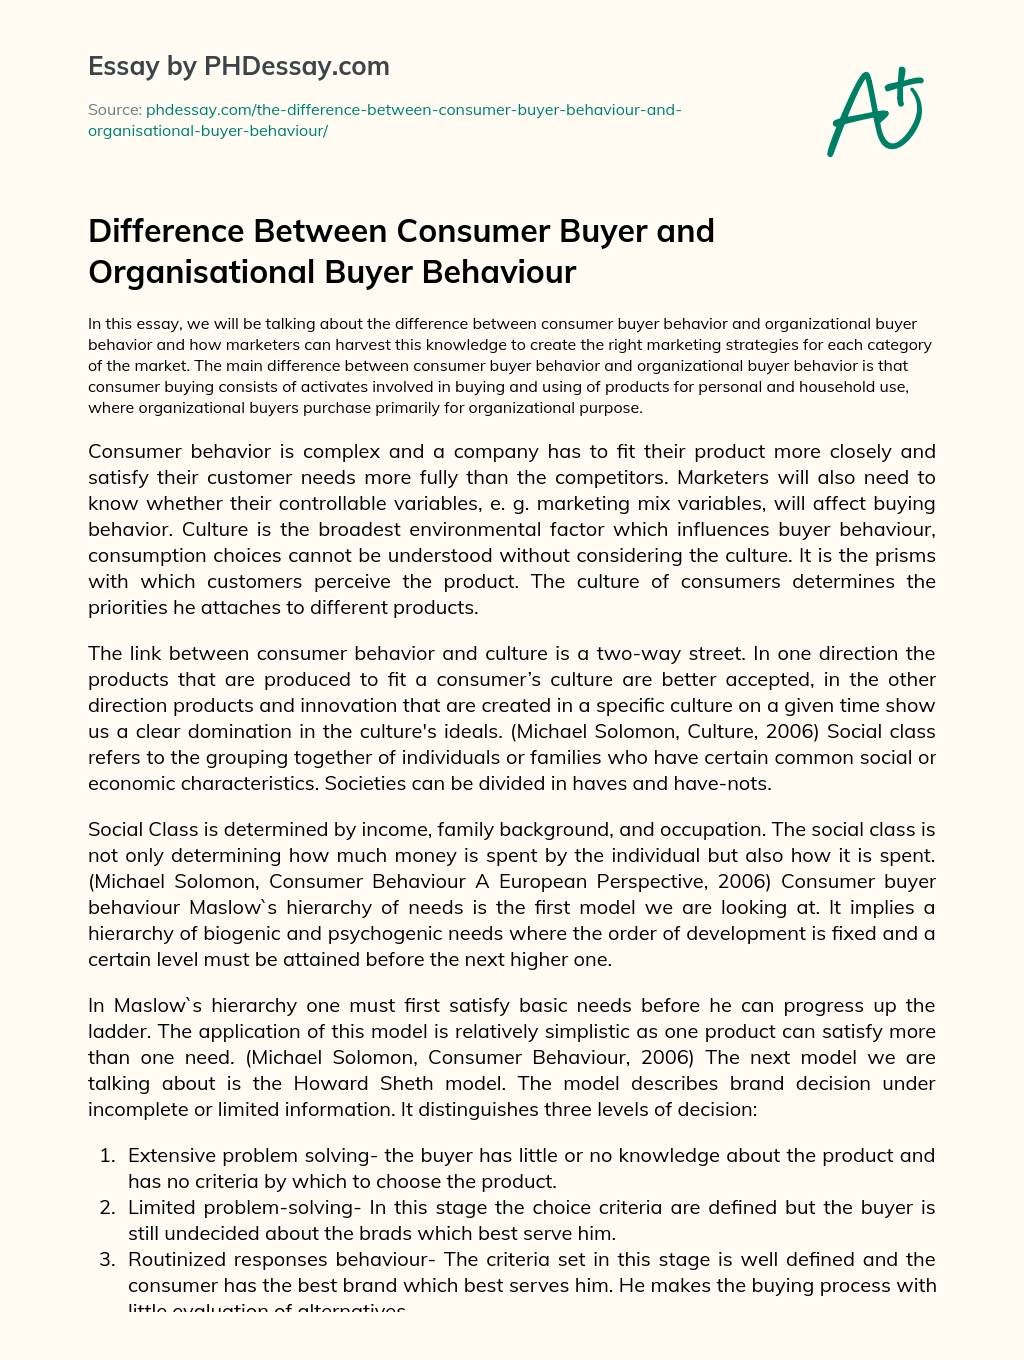 Difference Between Consumer Buyer and Organisational Buyer Behaviour essay